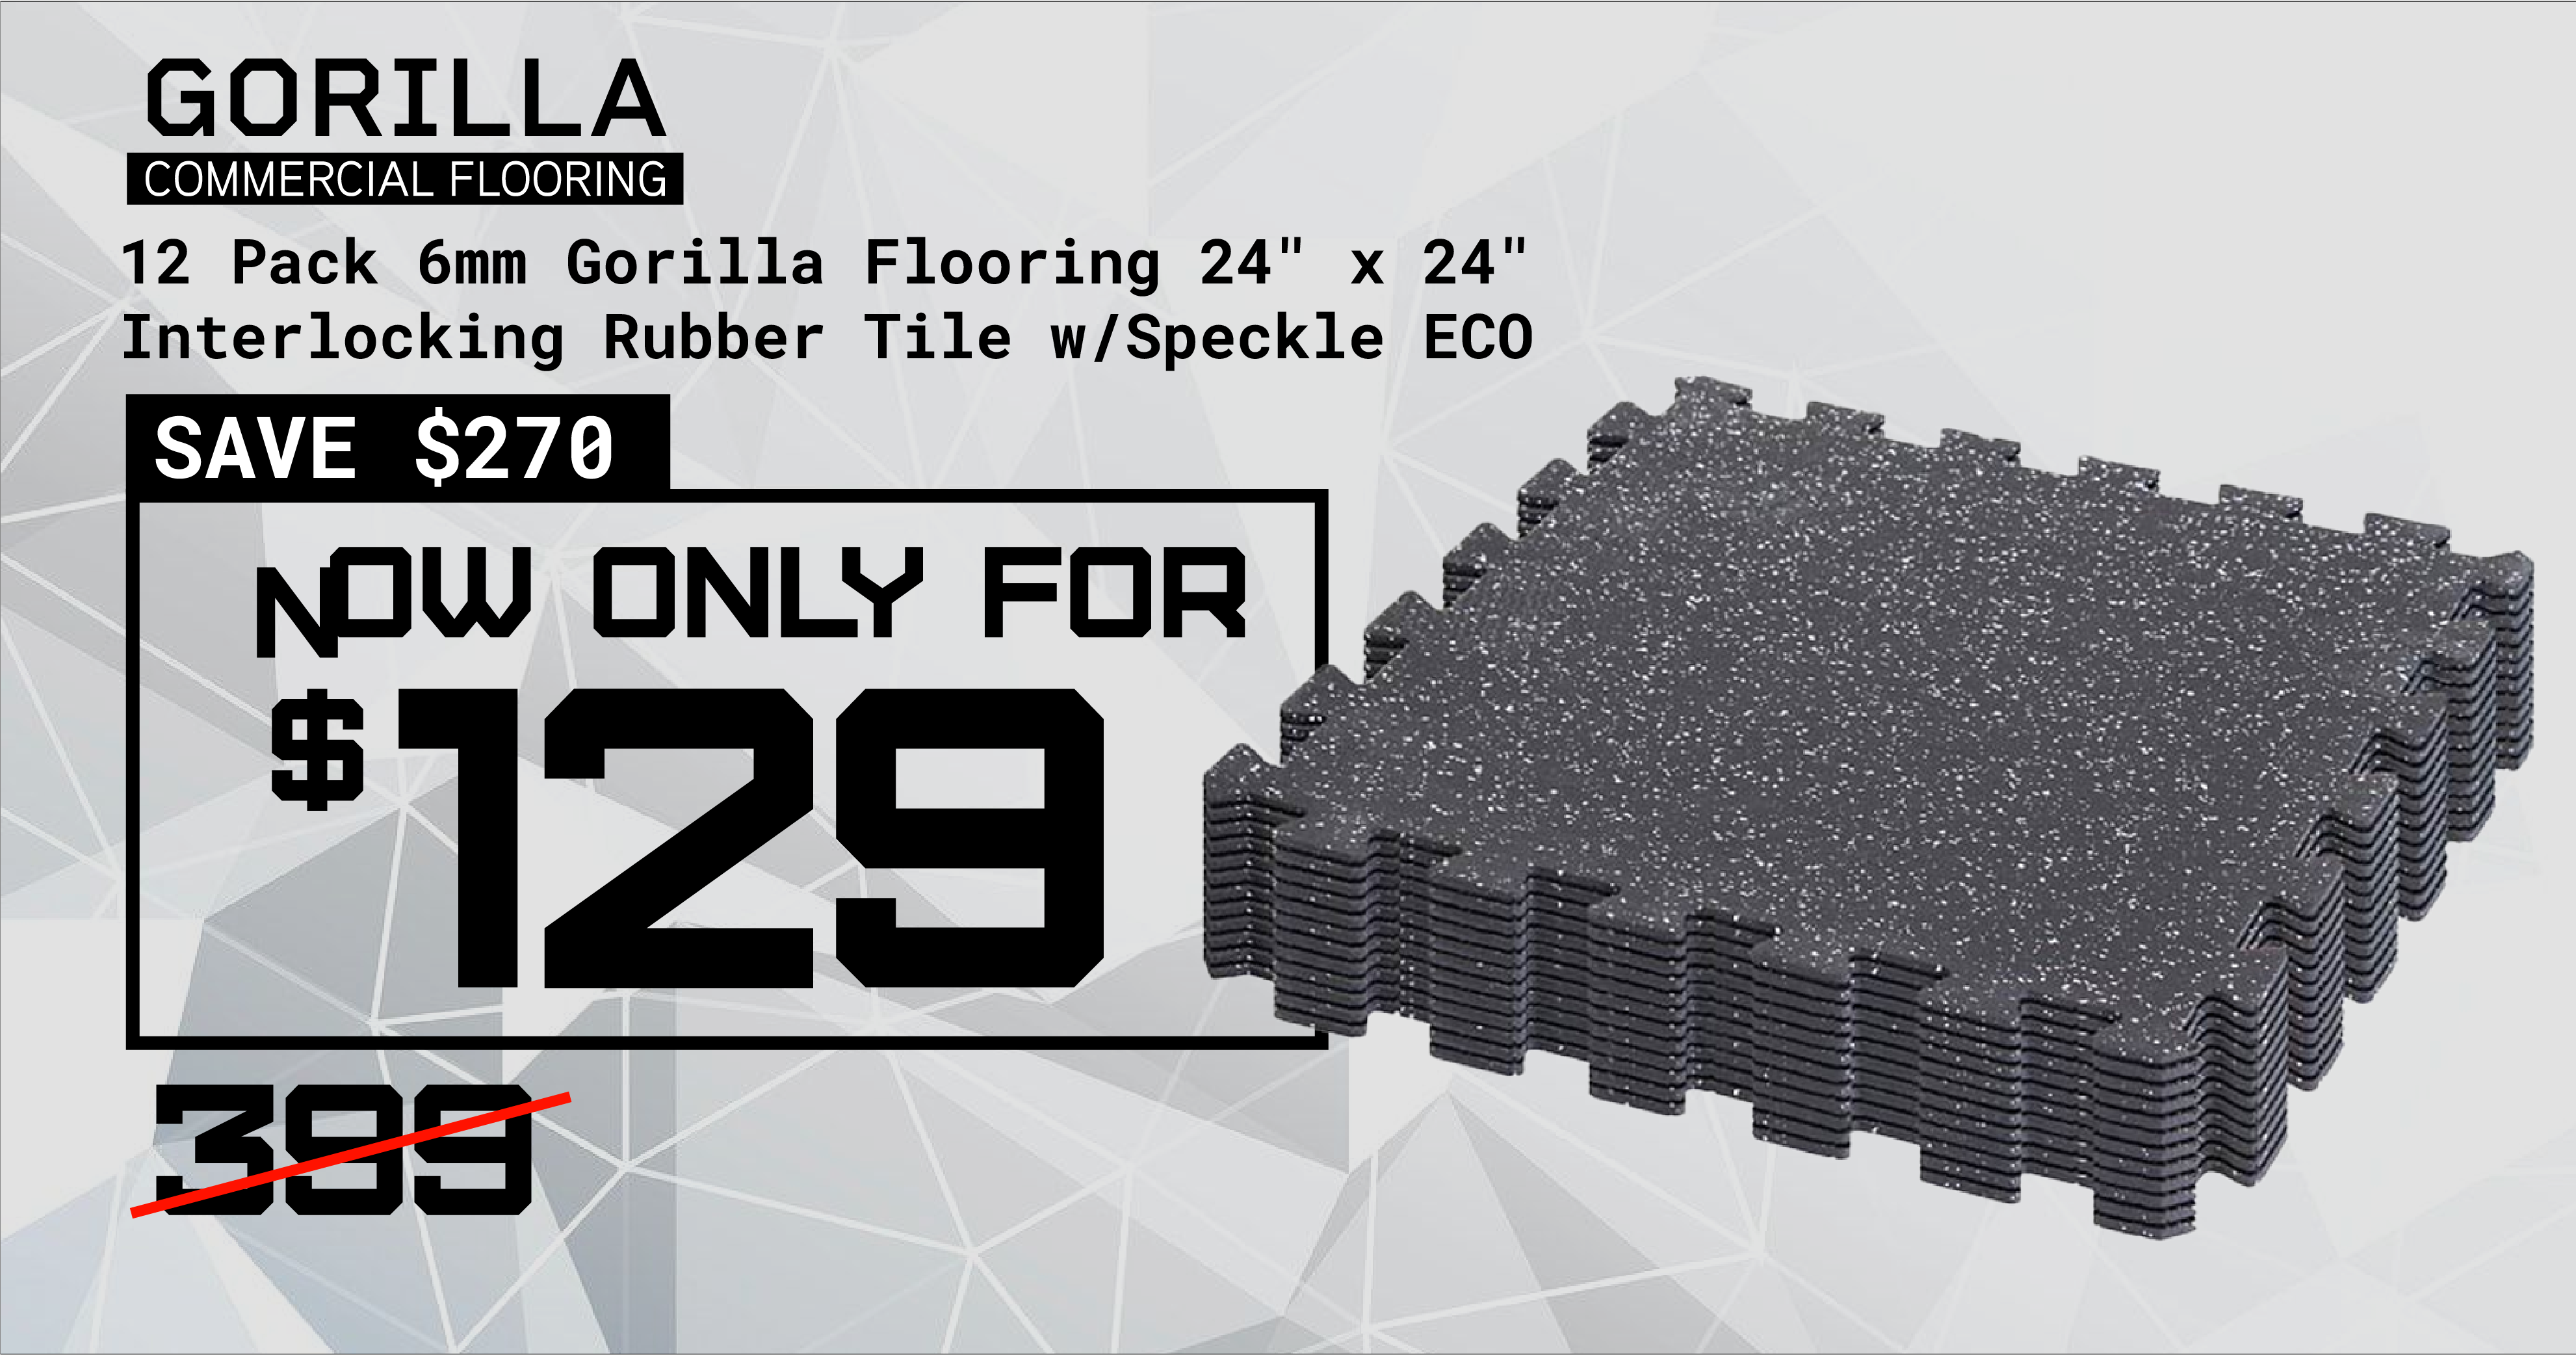 12 Pack 6mm Gorilla Flooring 24” x 24”